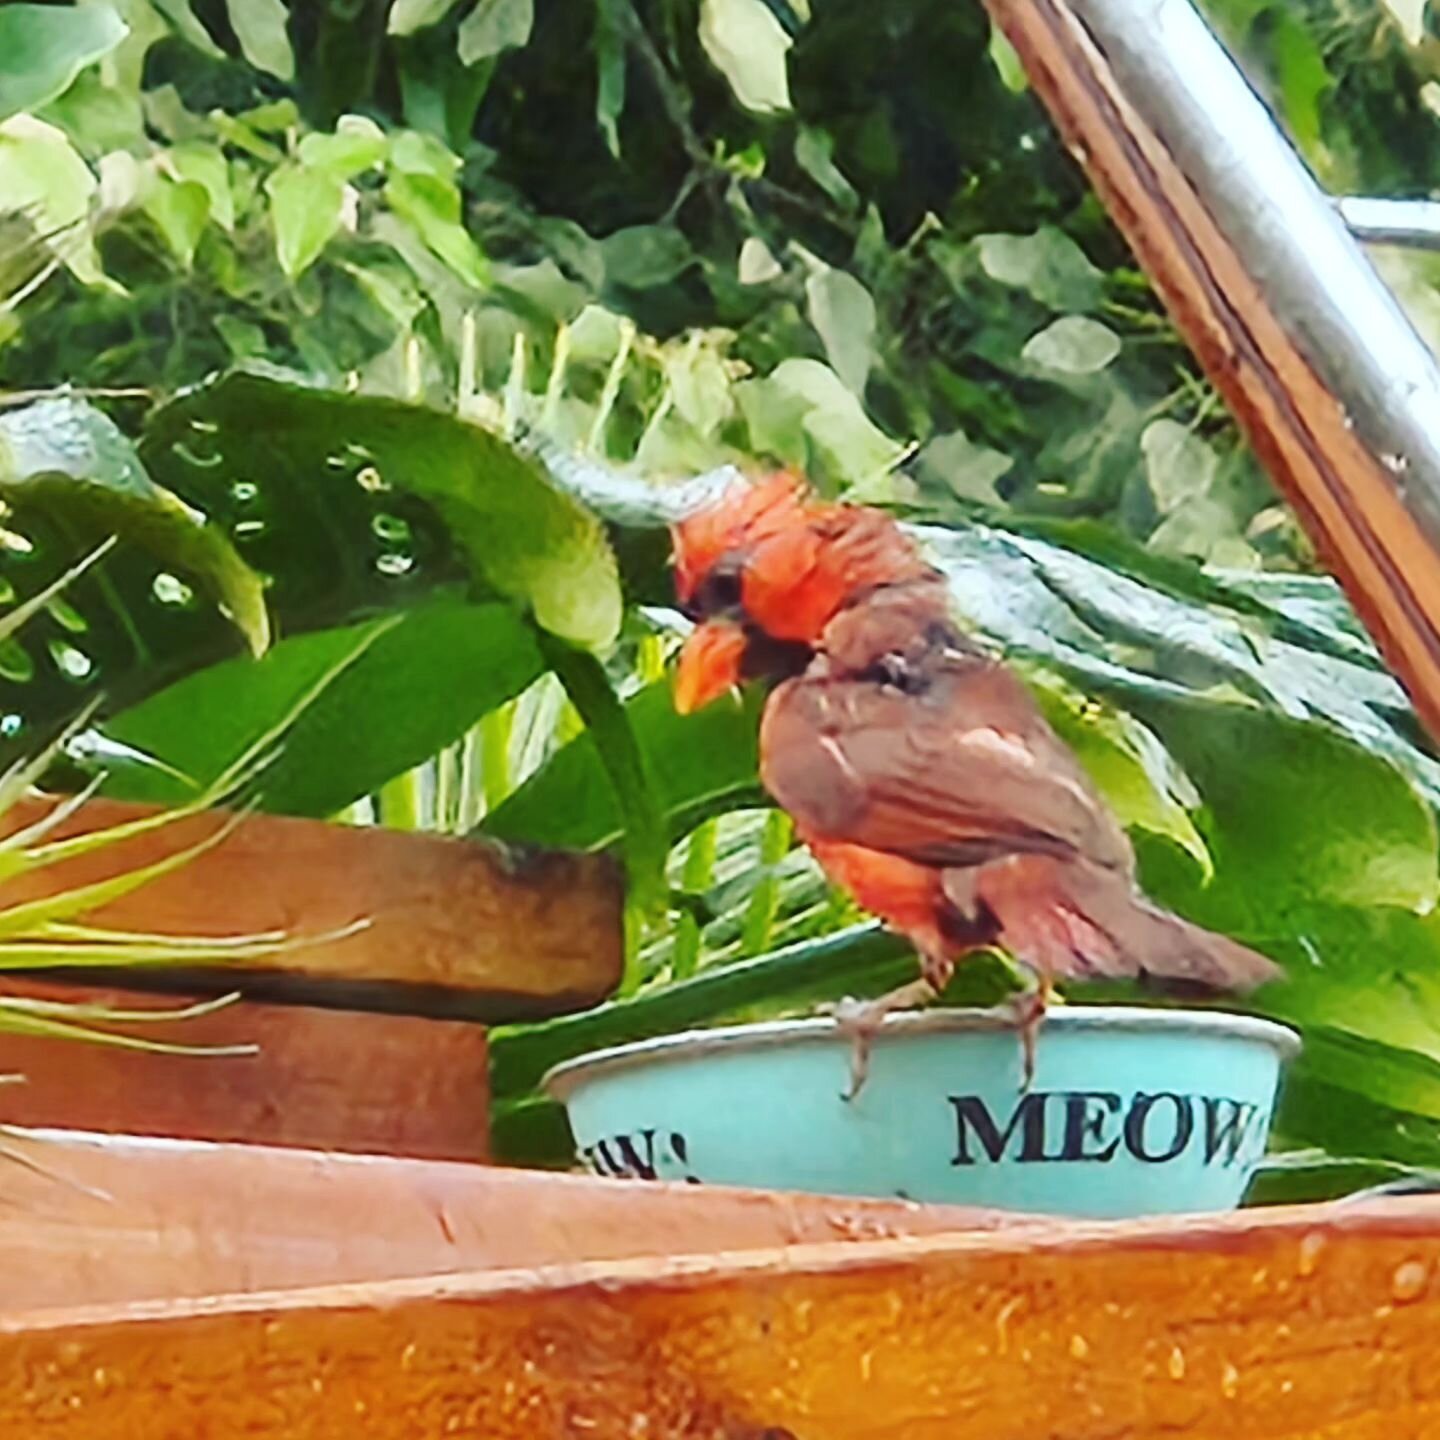 ...Meow!!! #birdwatching #cardinals #birdfeeder #meow #birdlovers #birdsofinstagram #bird_visitation #islandvibes #red #northern_cardinal #songbird #hawaiibirds #birds #birdingphotography #birding #perch #birdlife #birdie